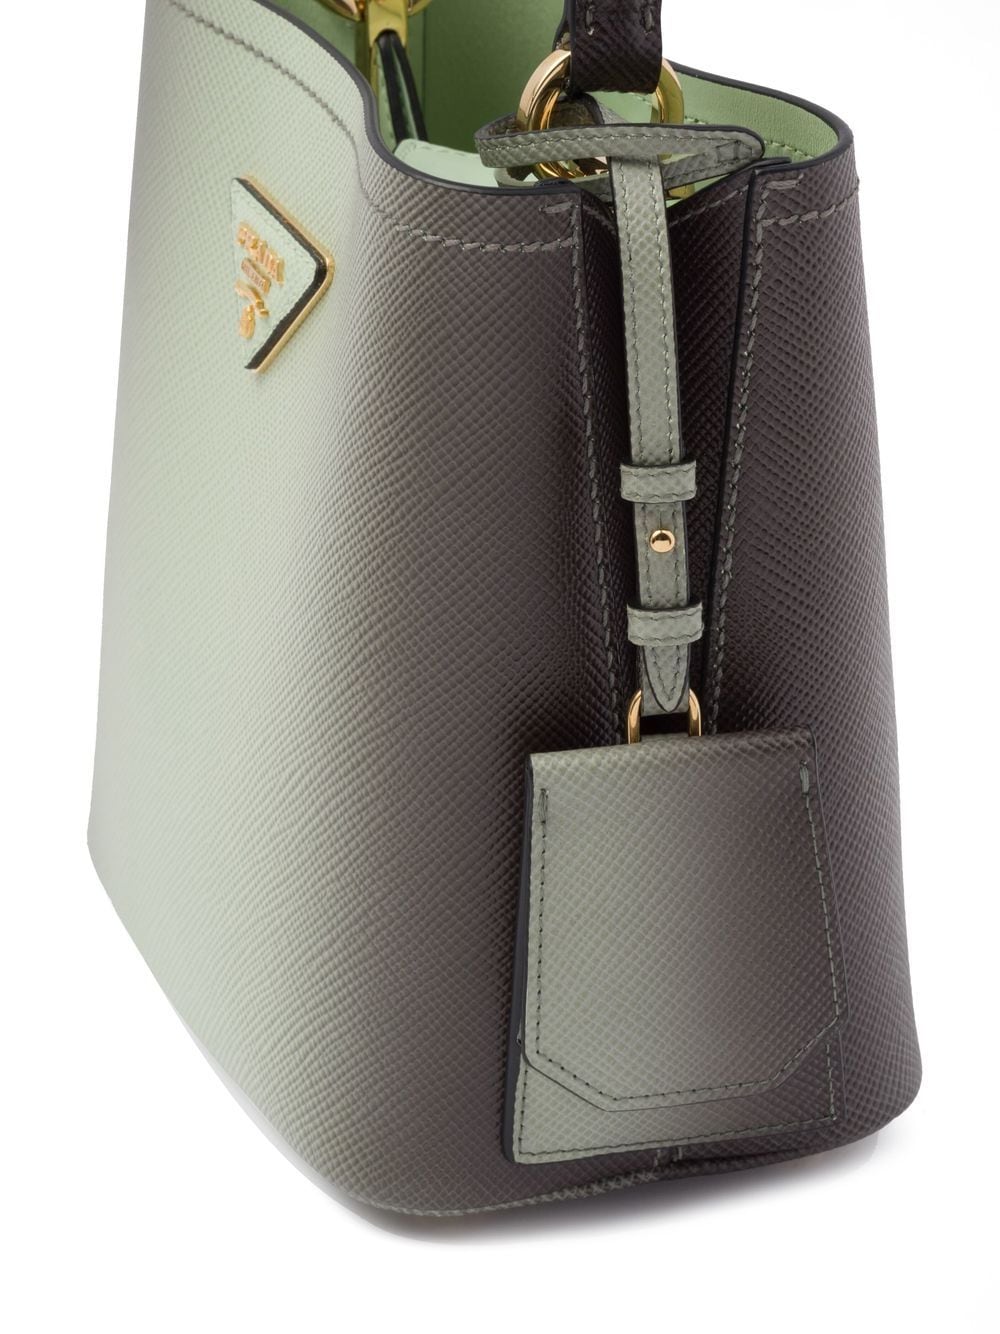 Emerald Small Saffiano Leather Prada Panier Bag